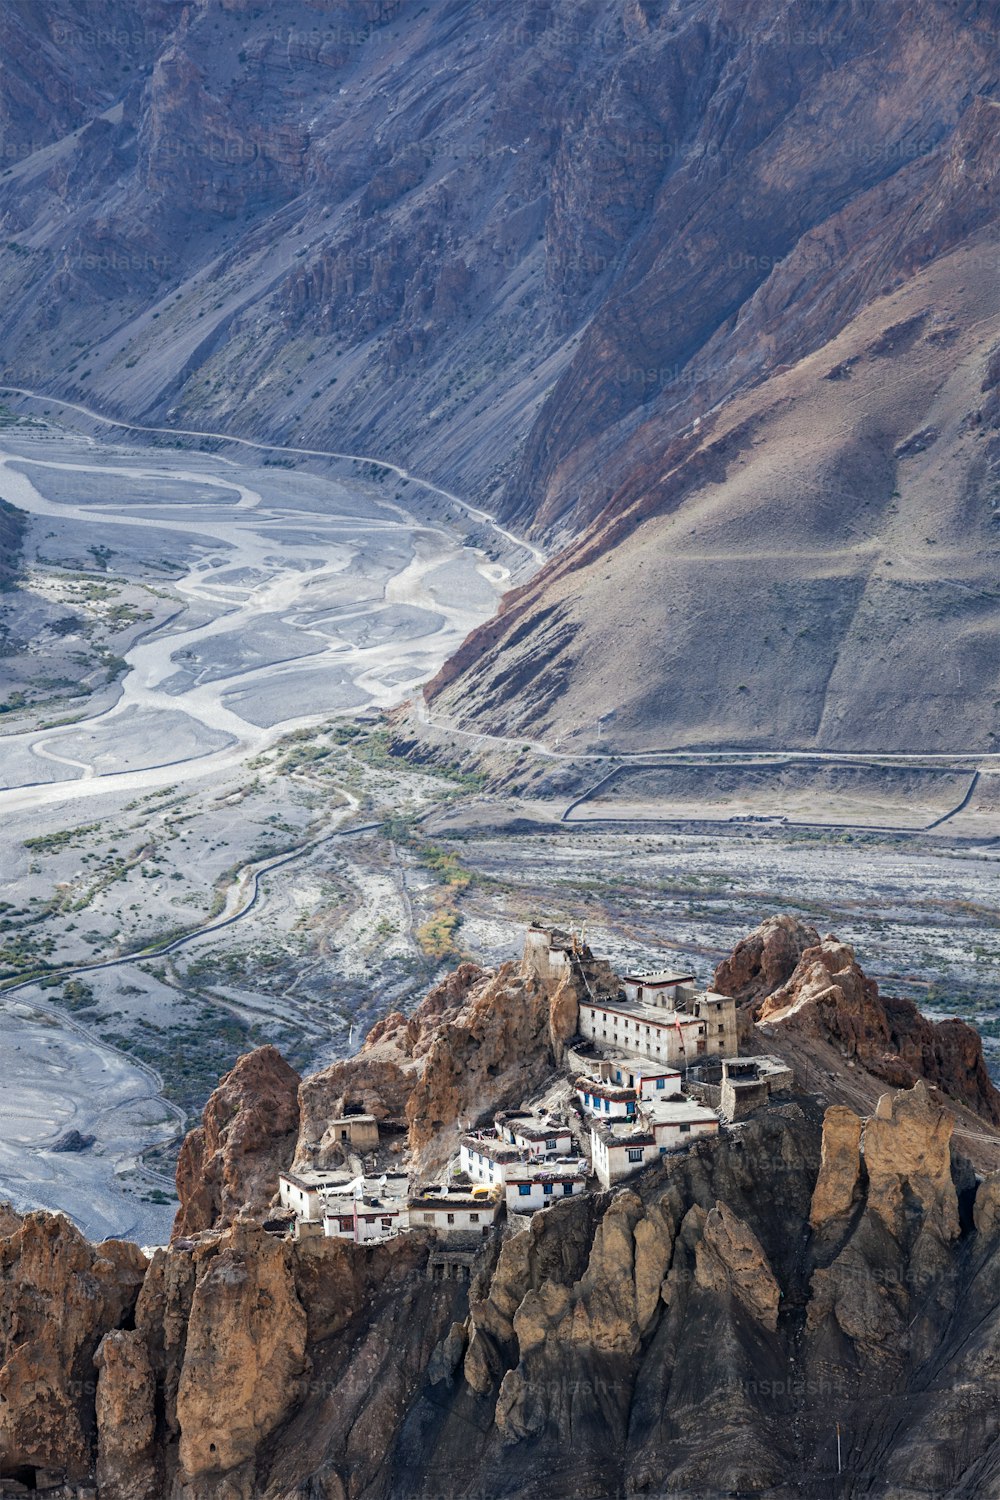 Dhankar monastry perched on a cliff in Himalayas. Dhankar, Spiti Valley, Himachal Pradesh, India